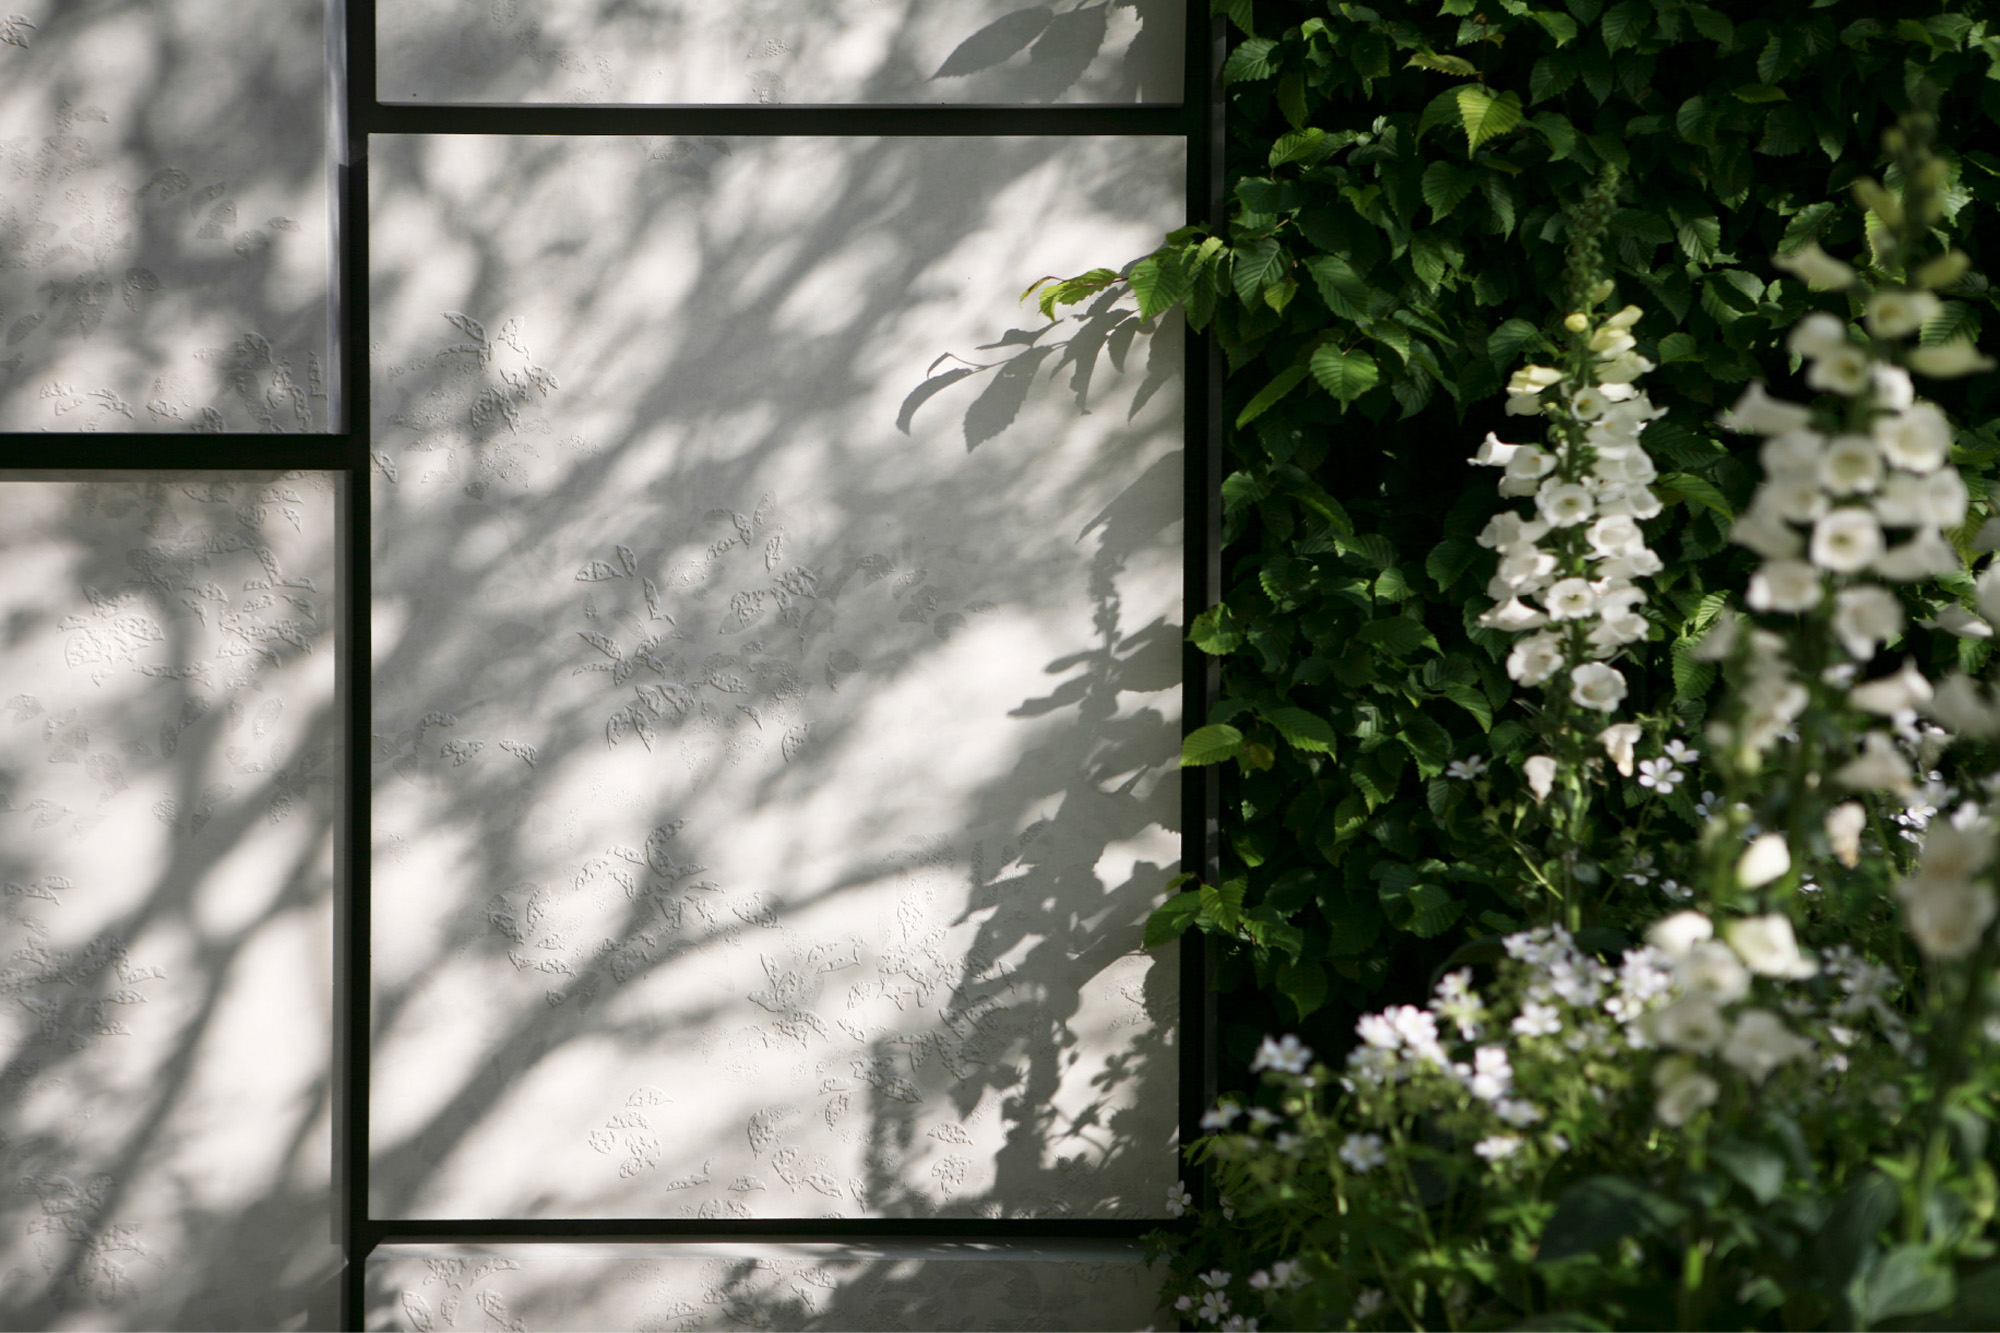 Dappled sunlight by Marcus Barnett - luxury garden design in London